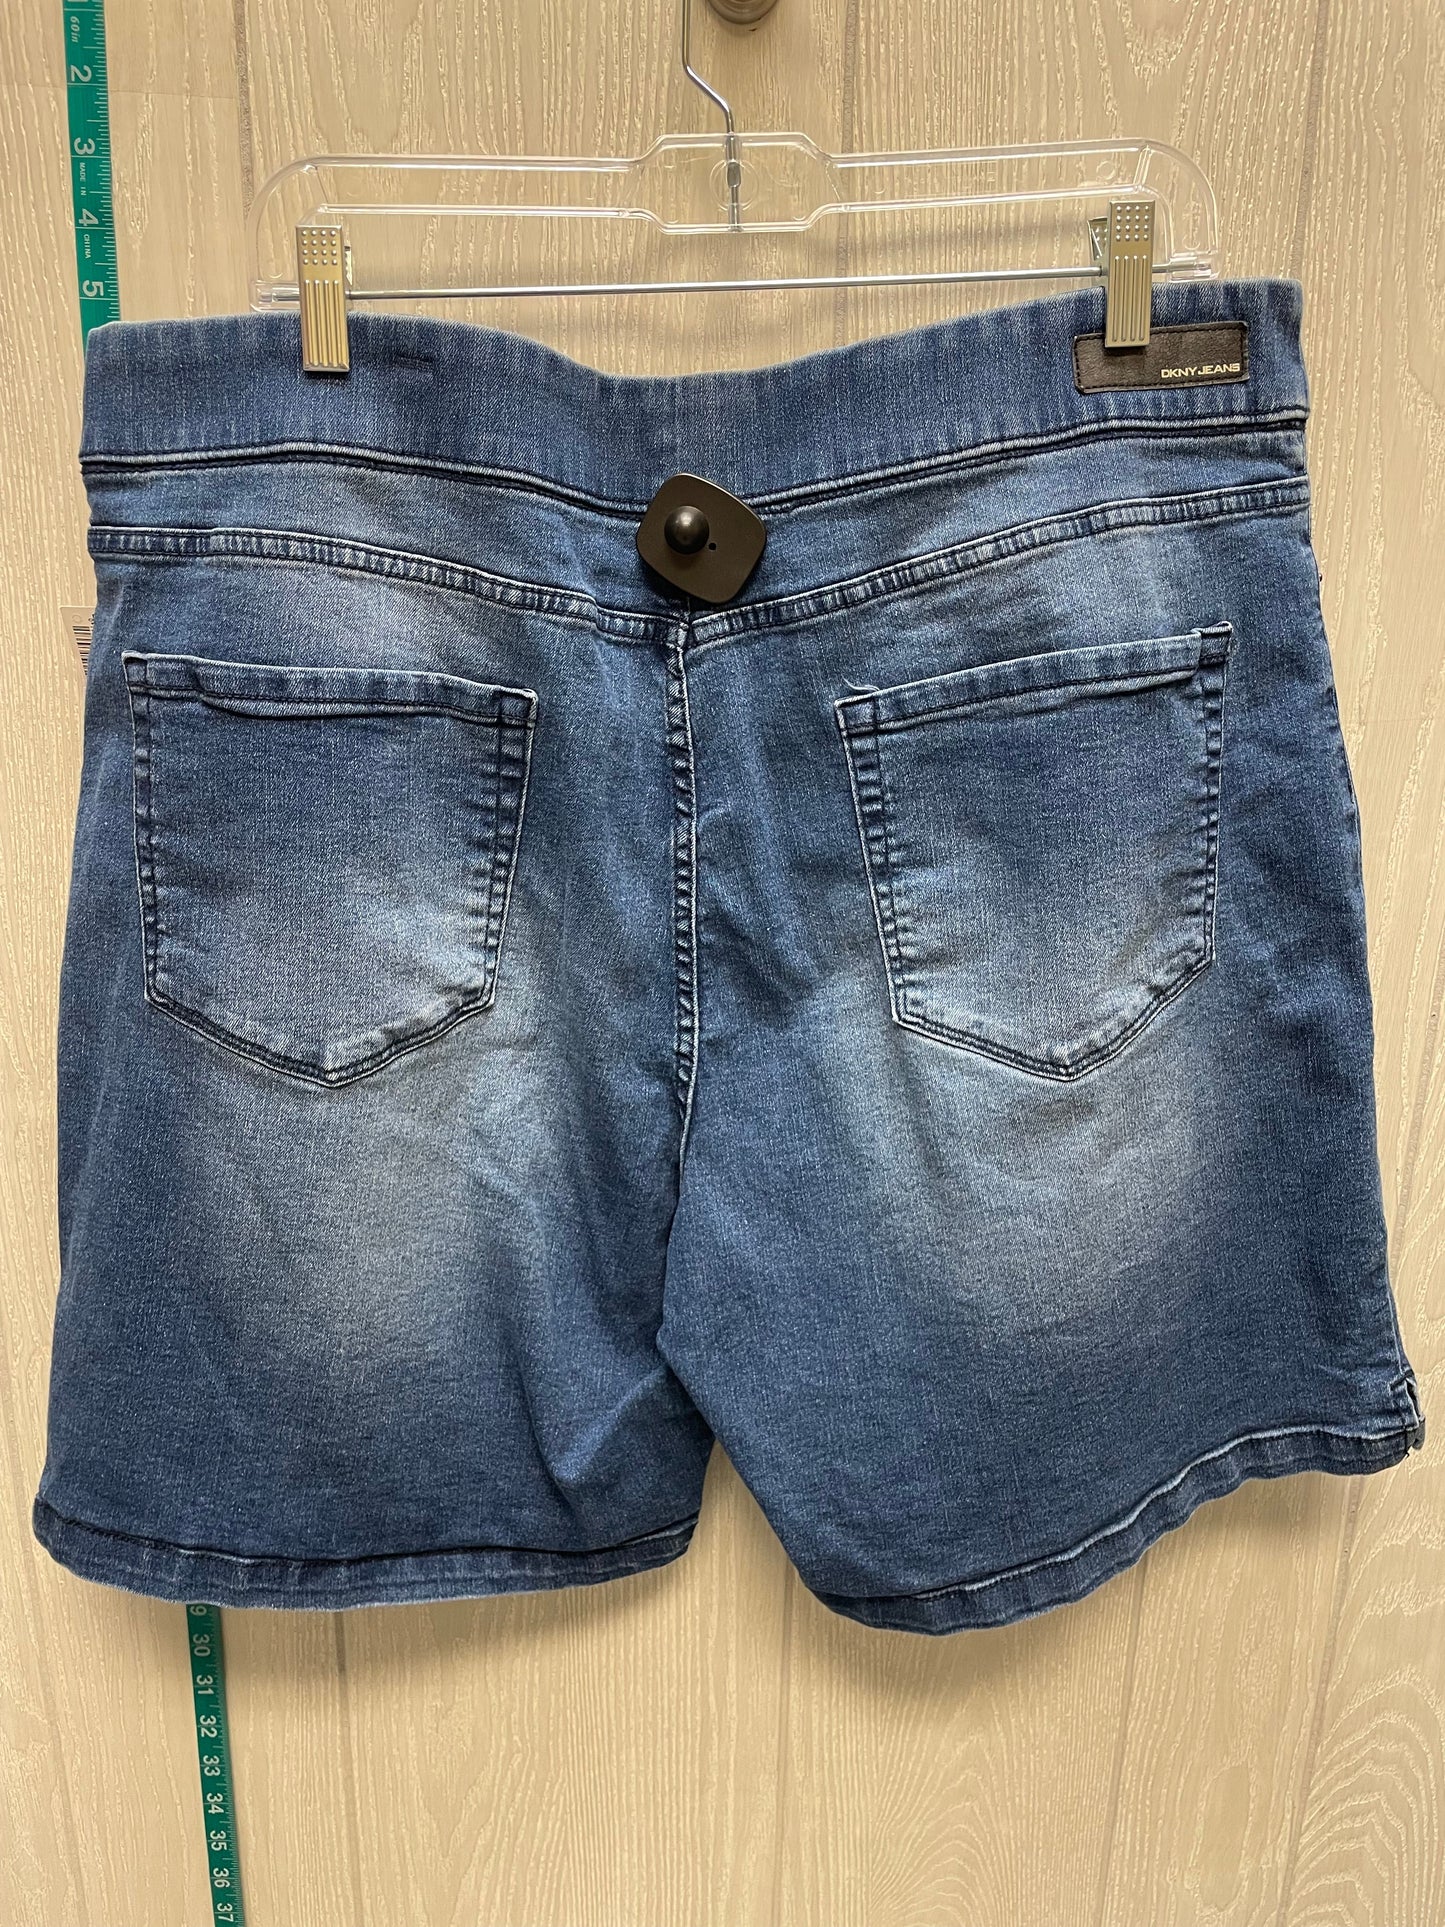 Blue Denim Shorts Dkny, Size 18